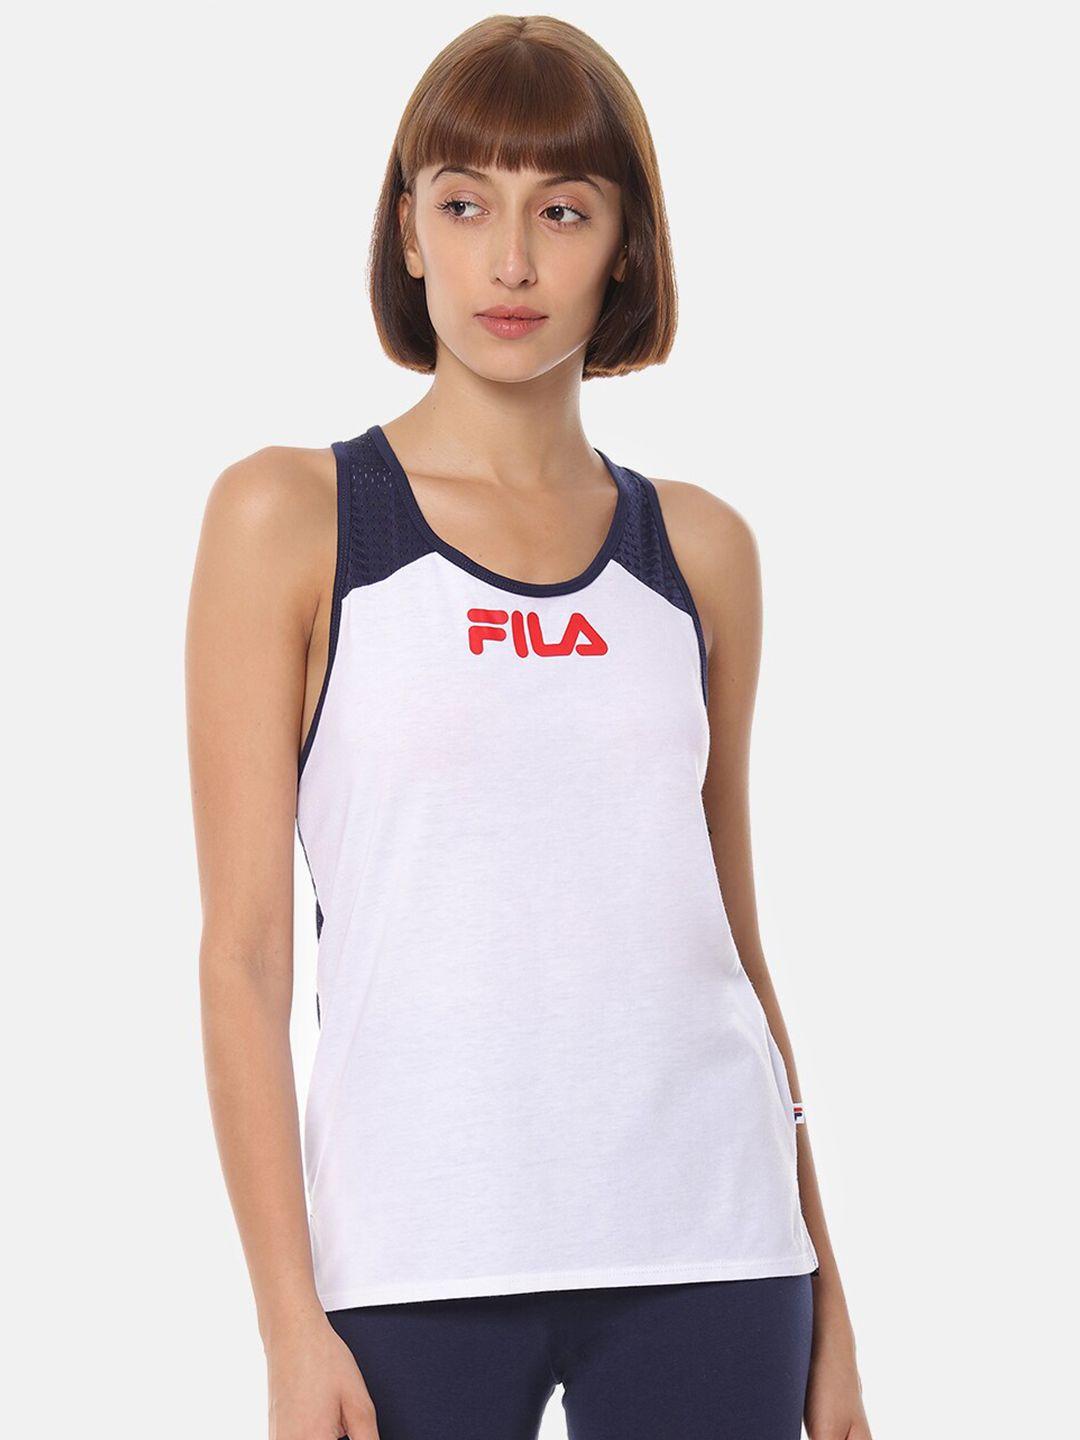 fila-white-&-navy-blue-brand-logo-printed-workout-bra-full-coverage